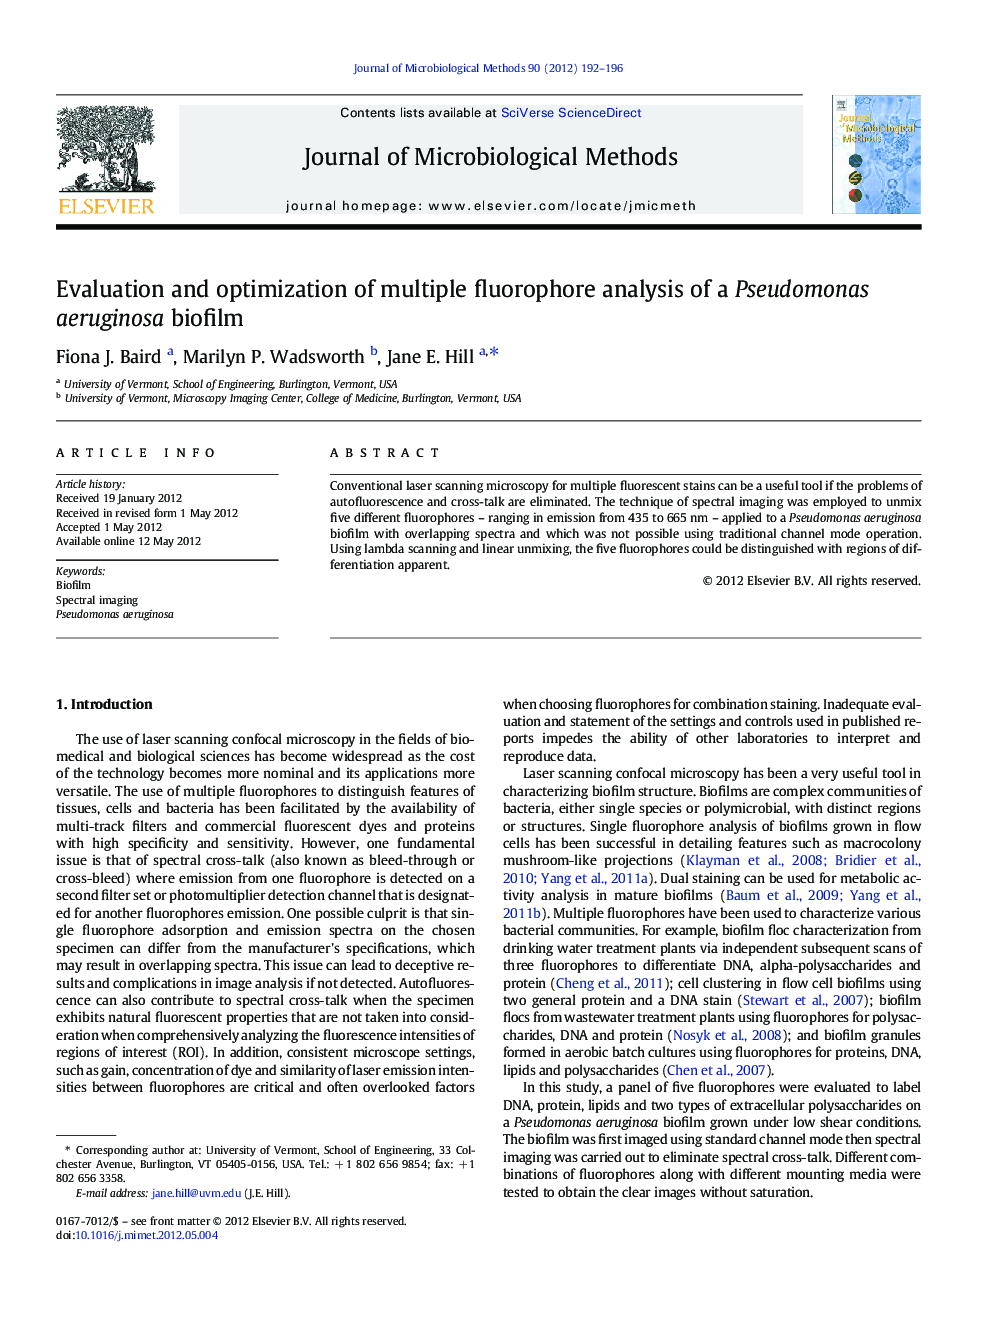 Evaluation and optimization of multiple fluorophore analysis of a Pseudomonas aeruginosa biofilm